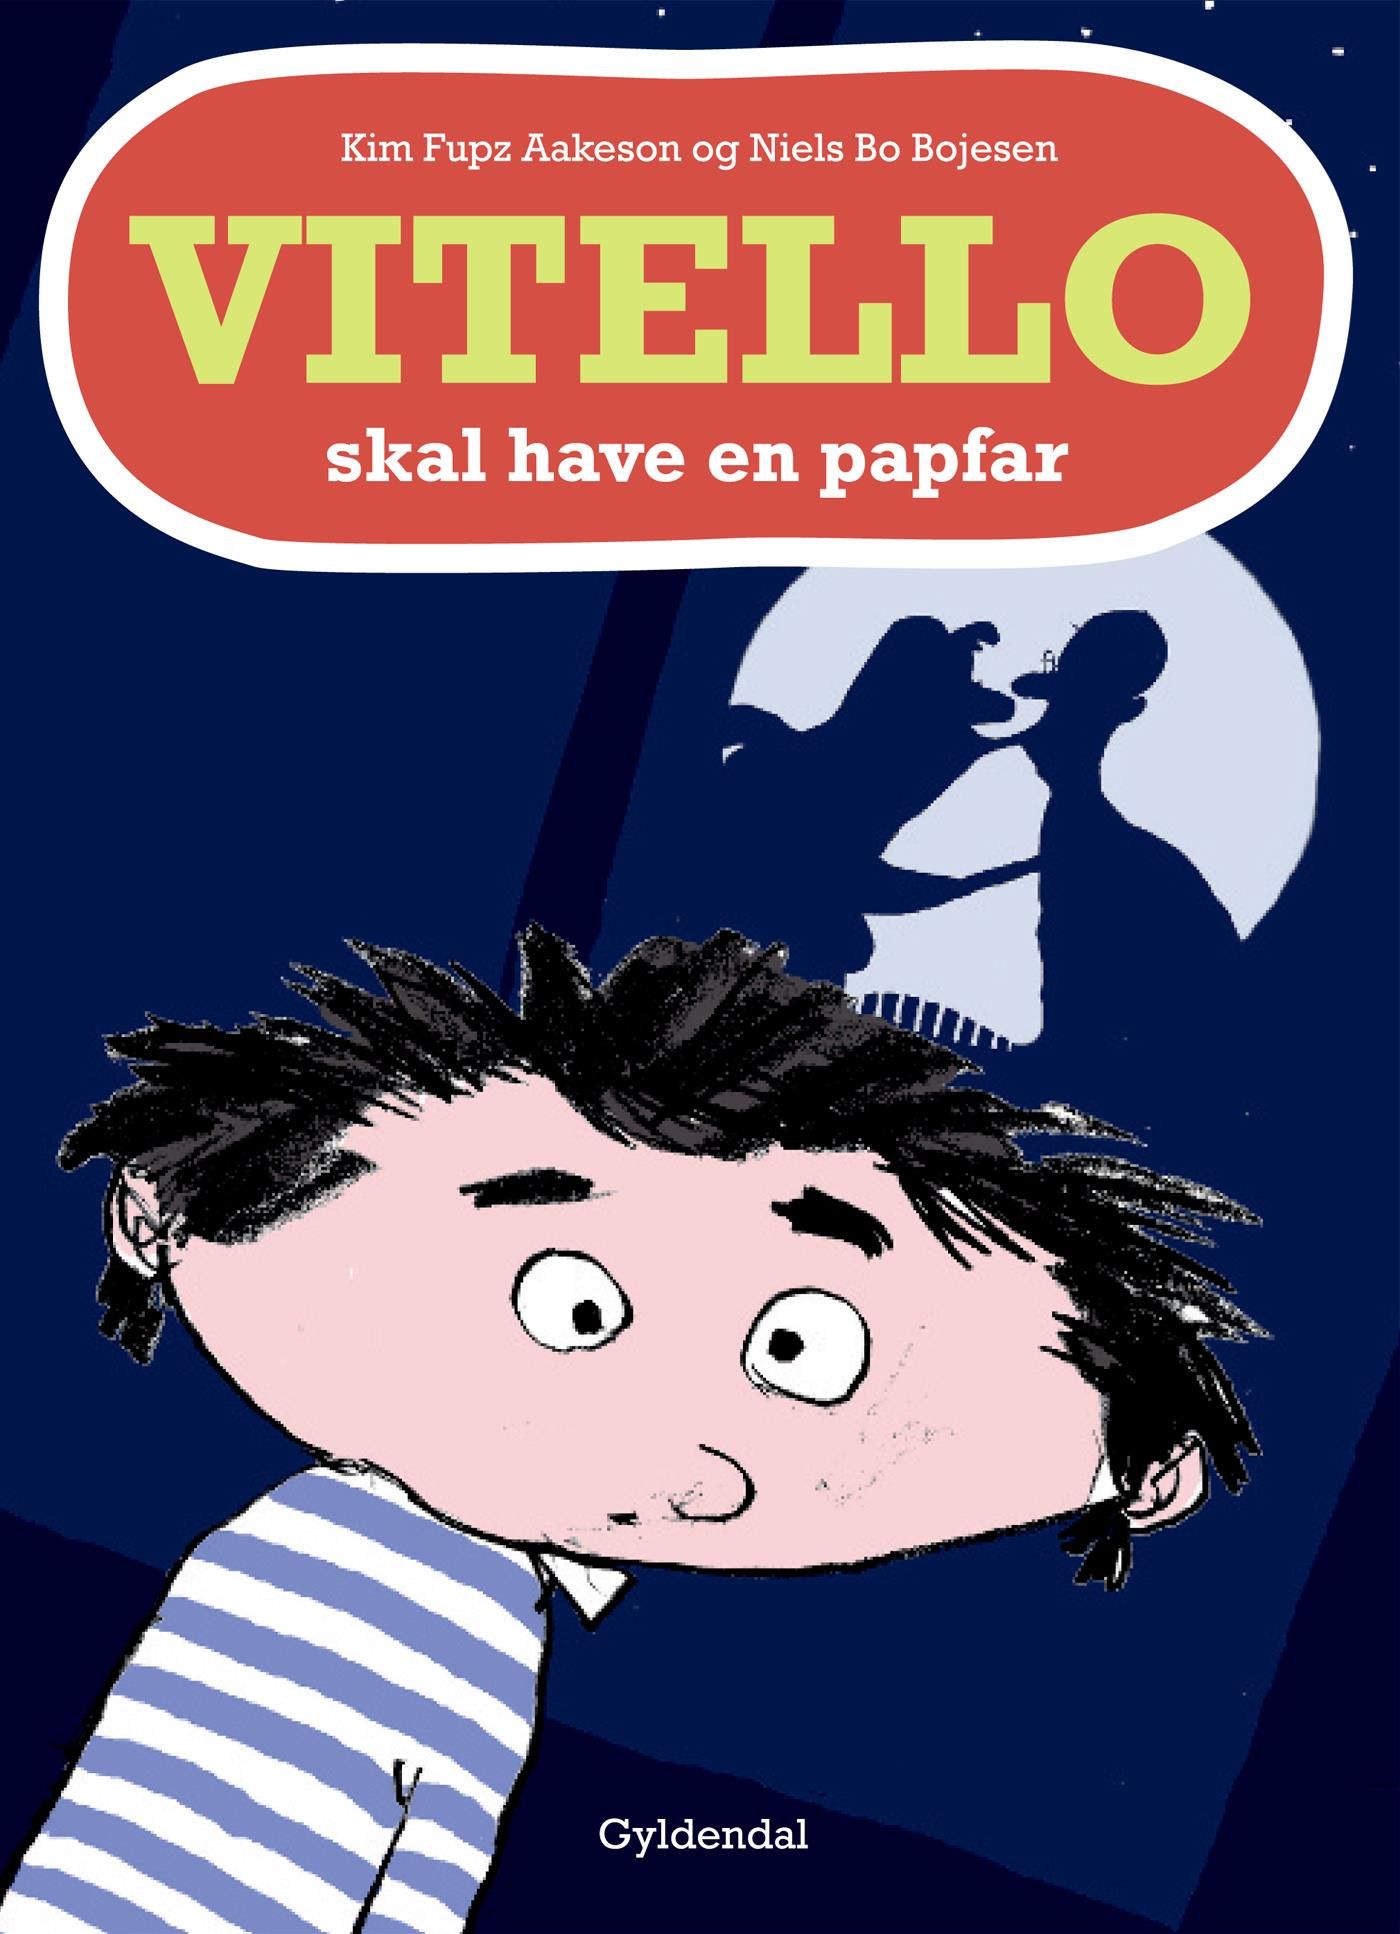 Vitello skal have en papfar - Lyt&læs, eBook by Niels Bo Bojesen, Kim Fupz Aakeson